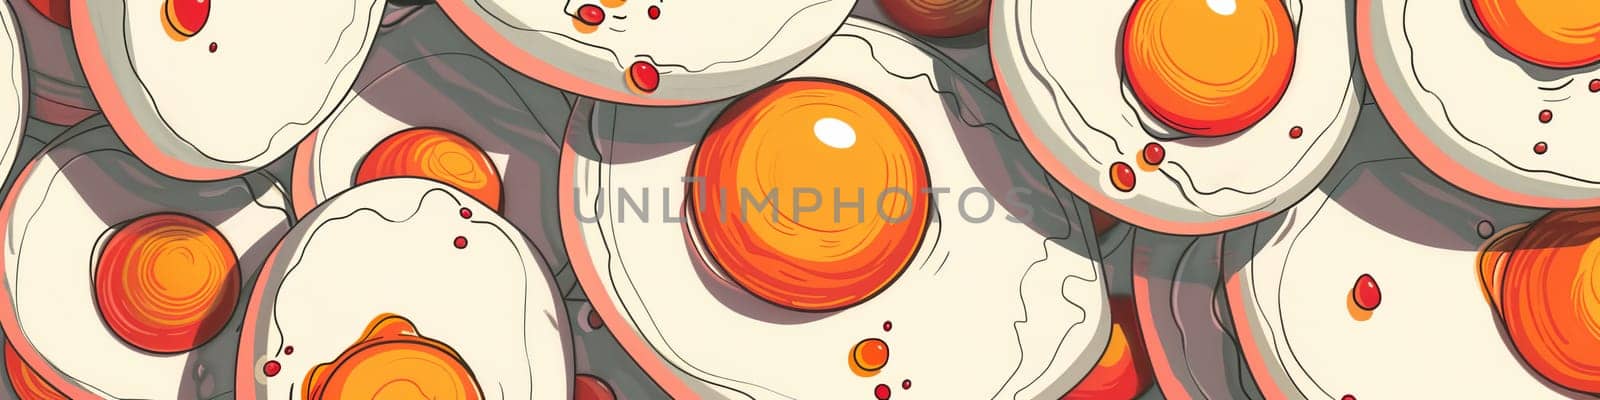 Cartoon bulls eye egg as a background or texture